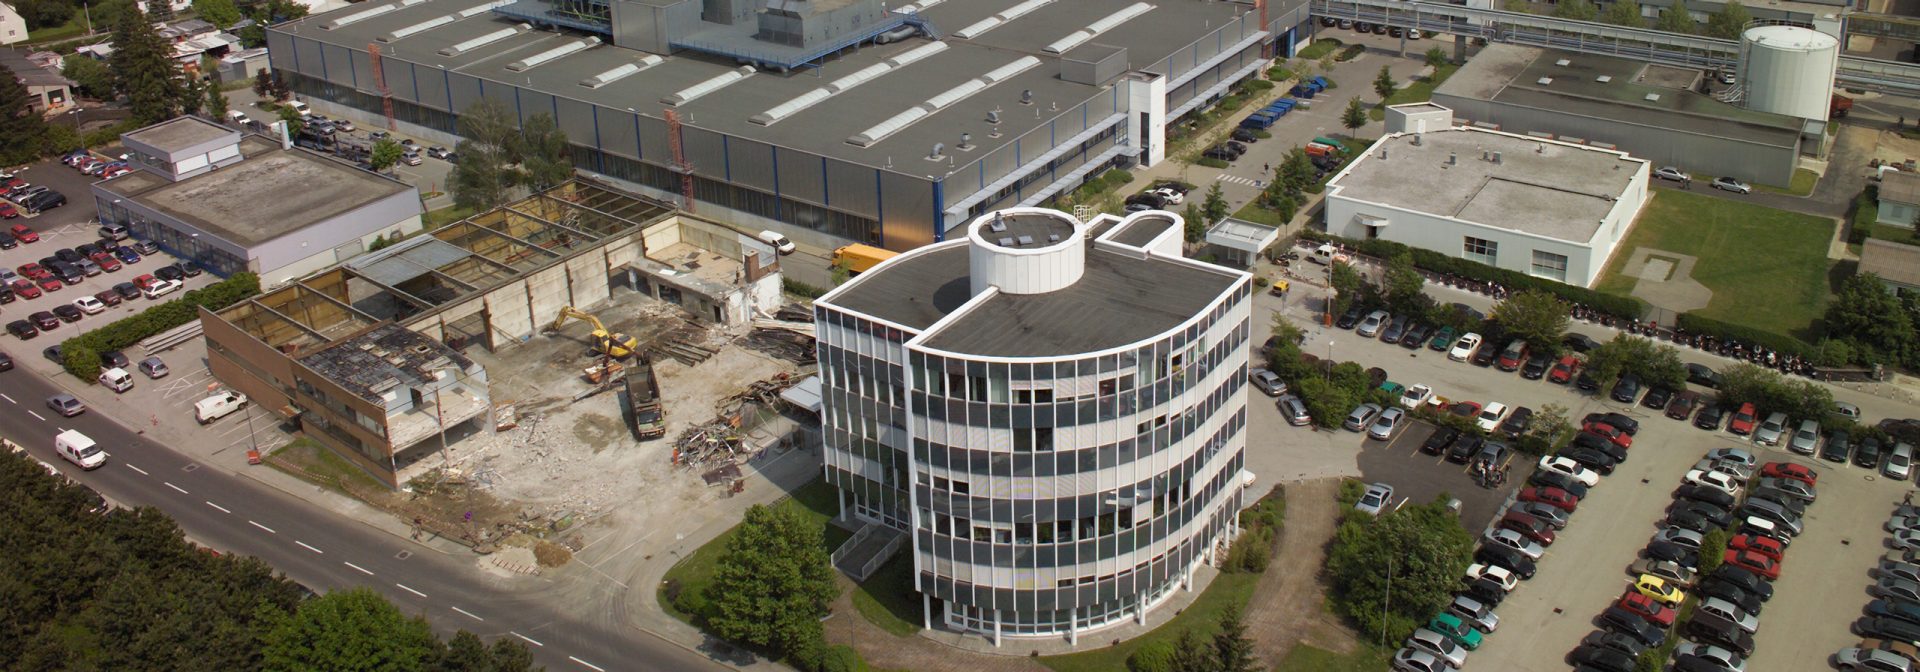 BMW plant Steyr aerial view